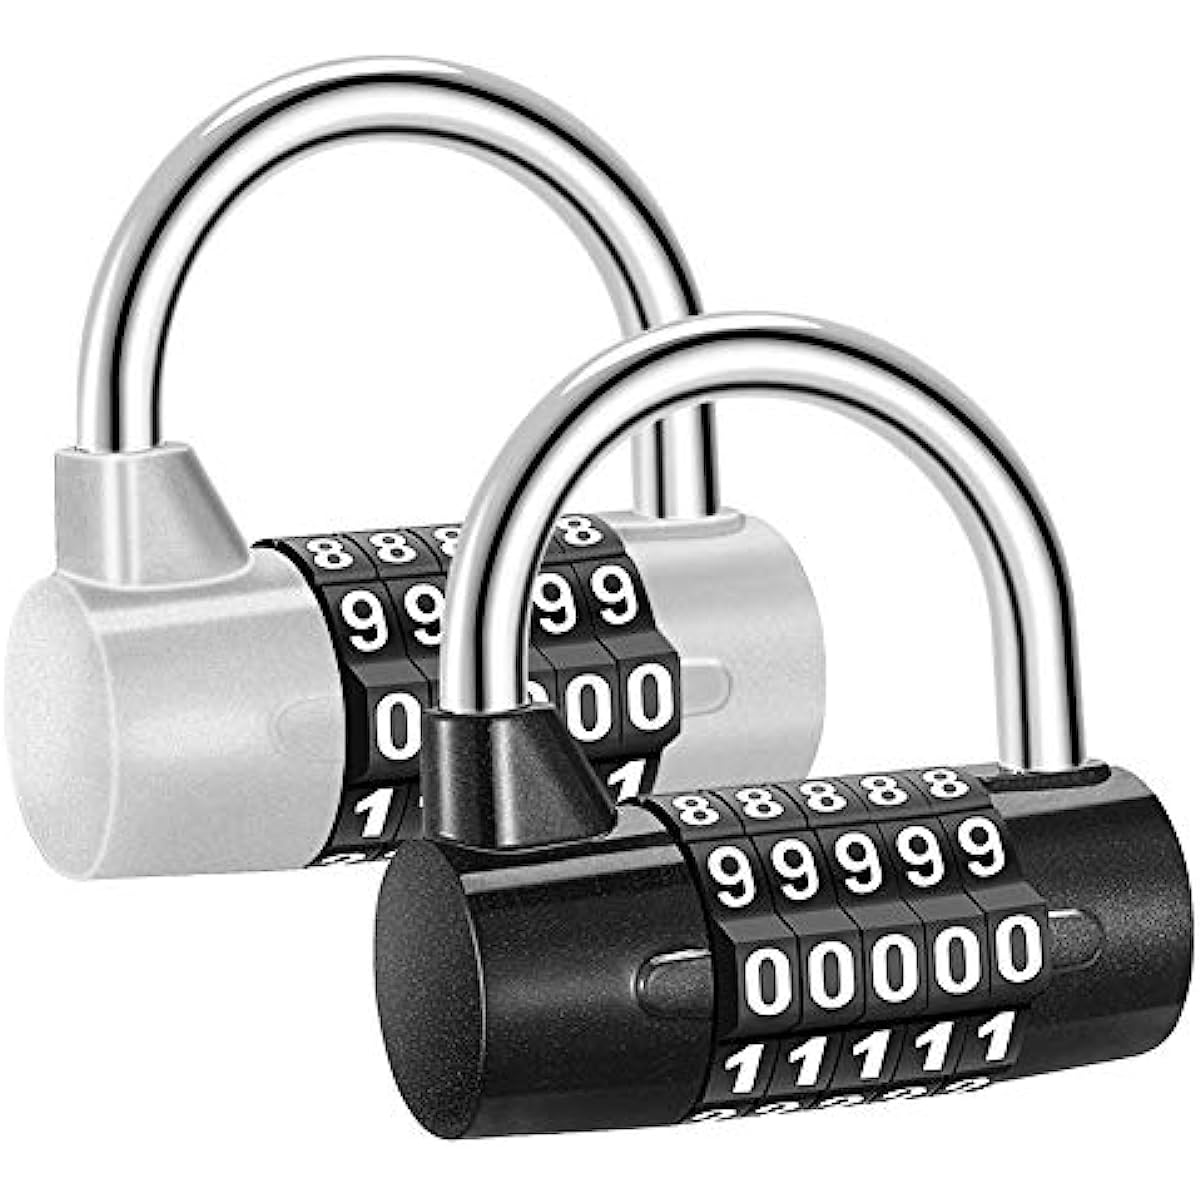 3 Digit Normal Shackle Combination Lock, Black Combination Lock - 2PCS